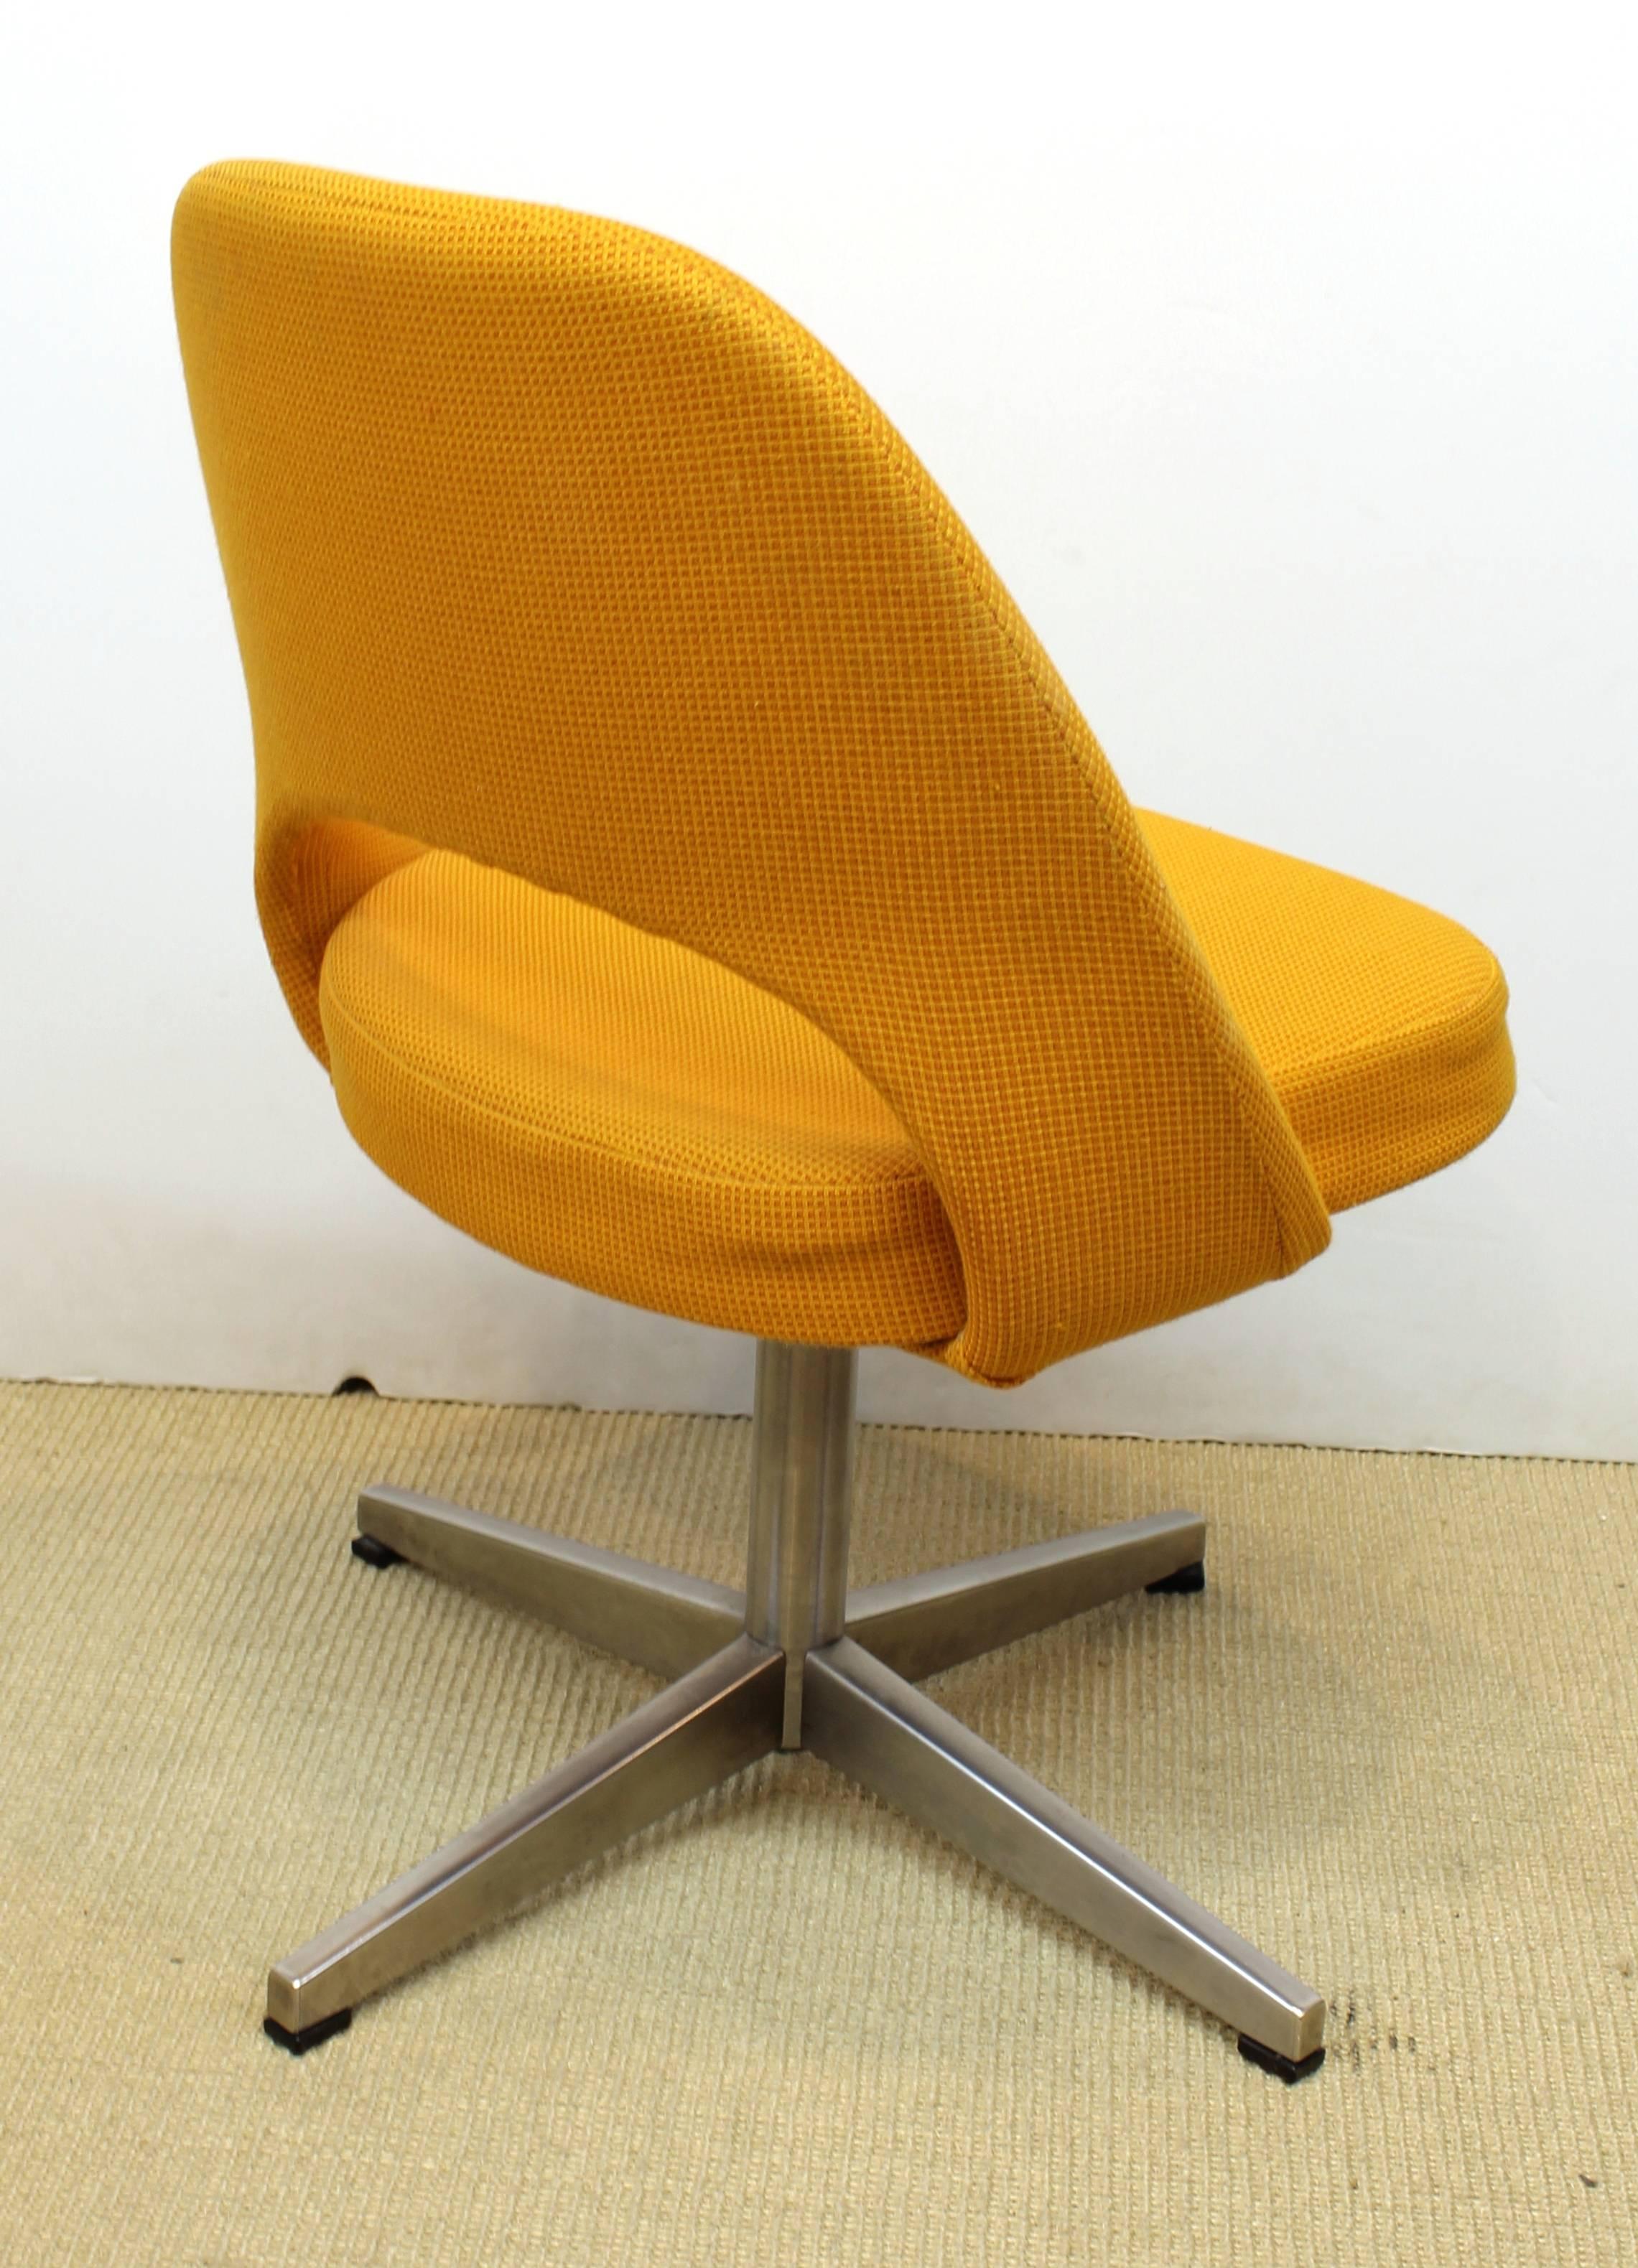 Mid-Century Modern Eero Saarinen for Knoll International Swivel Chair with Golden Yellow Upholstery